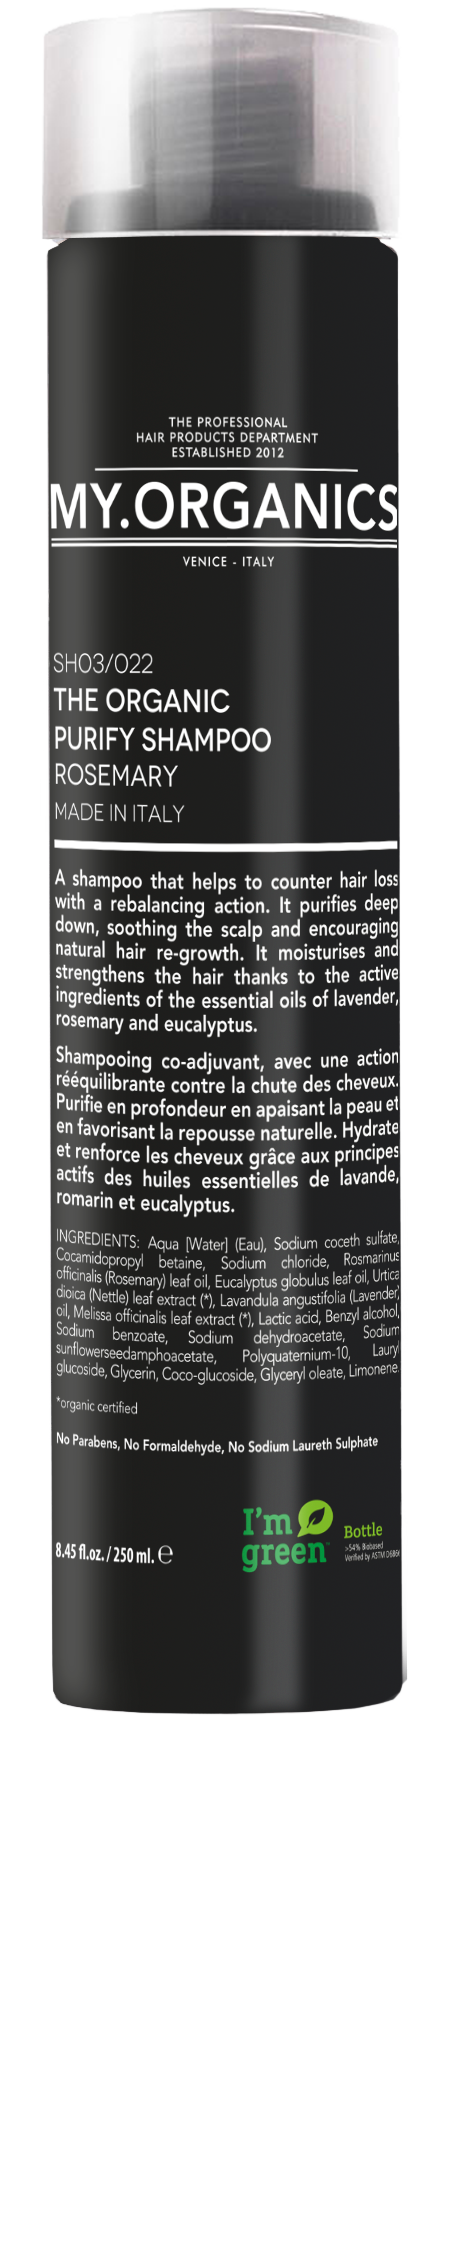 The Organic Purify Shampoo 250ml